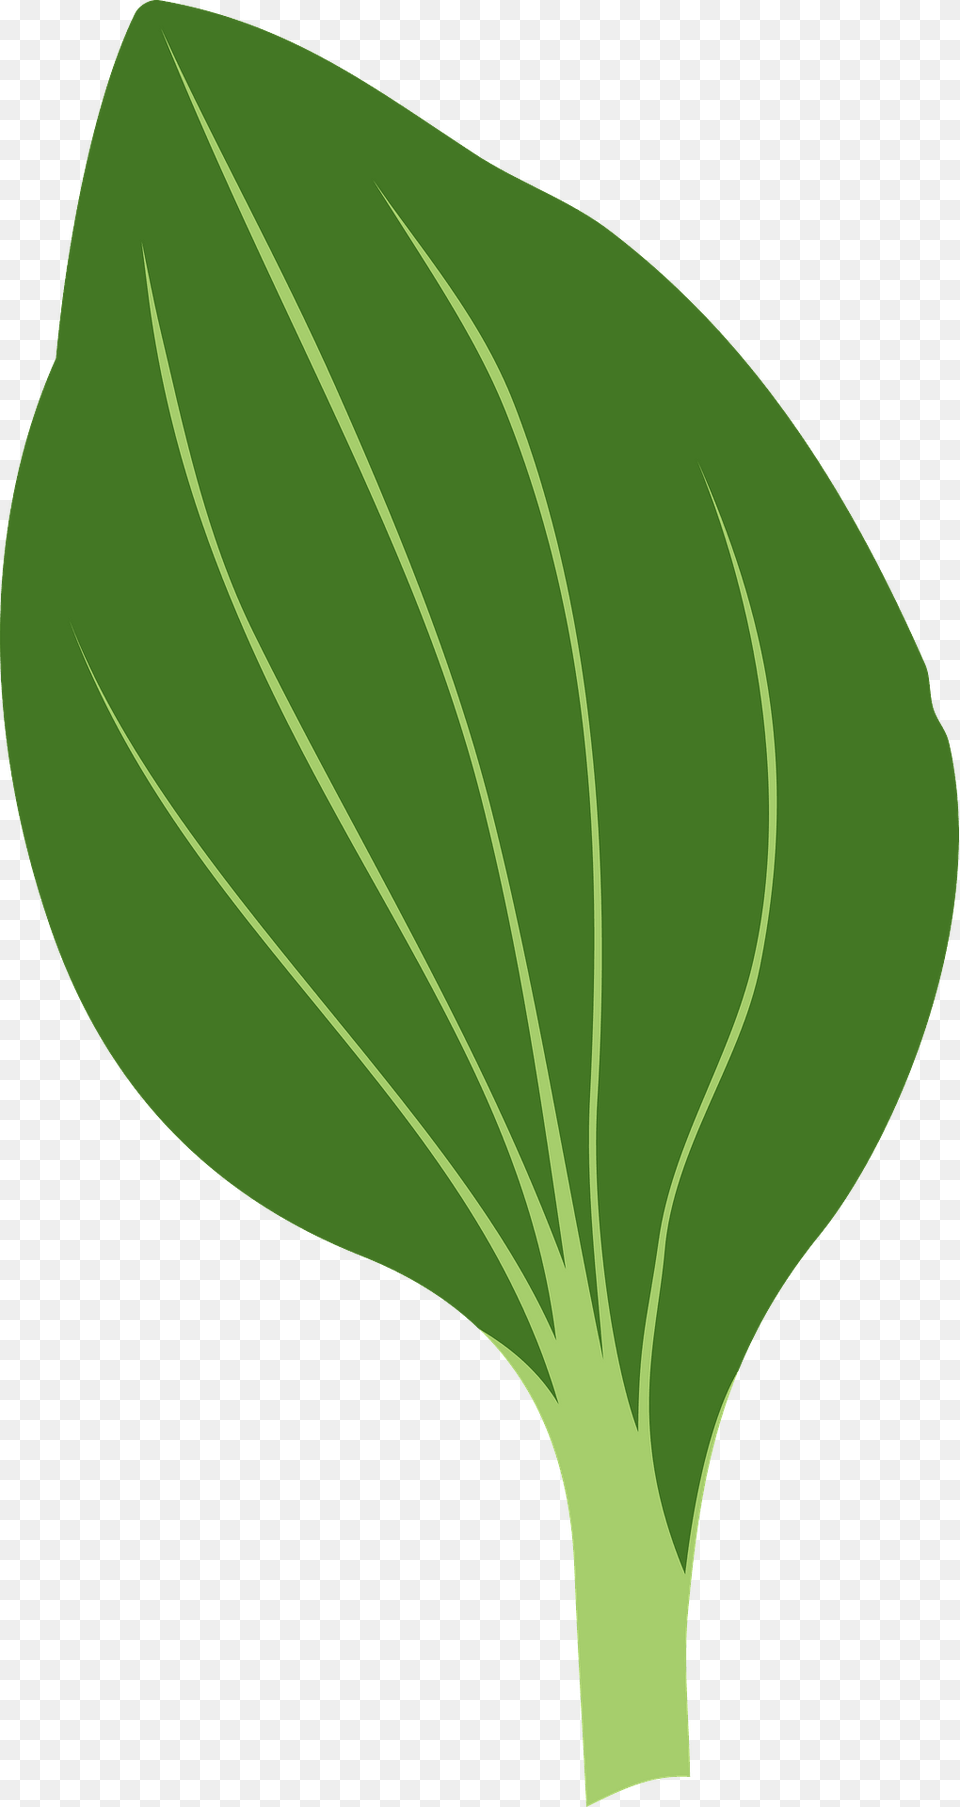 Plant Leaf Clipart, Food, Leafy Green Vegetable, Produce, Vegetable Png Image